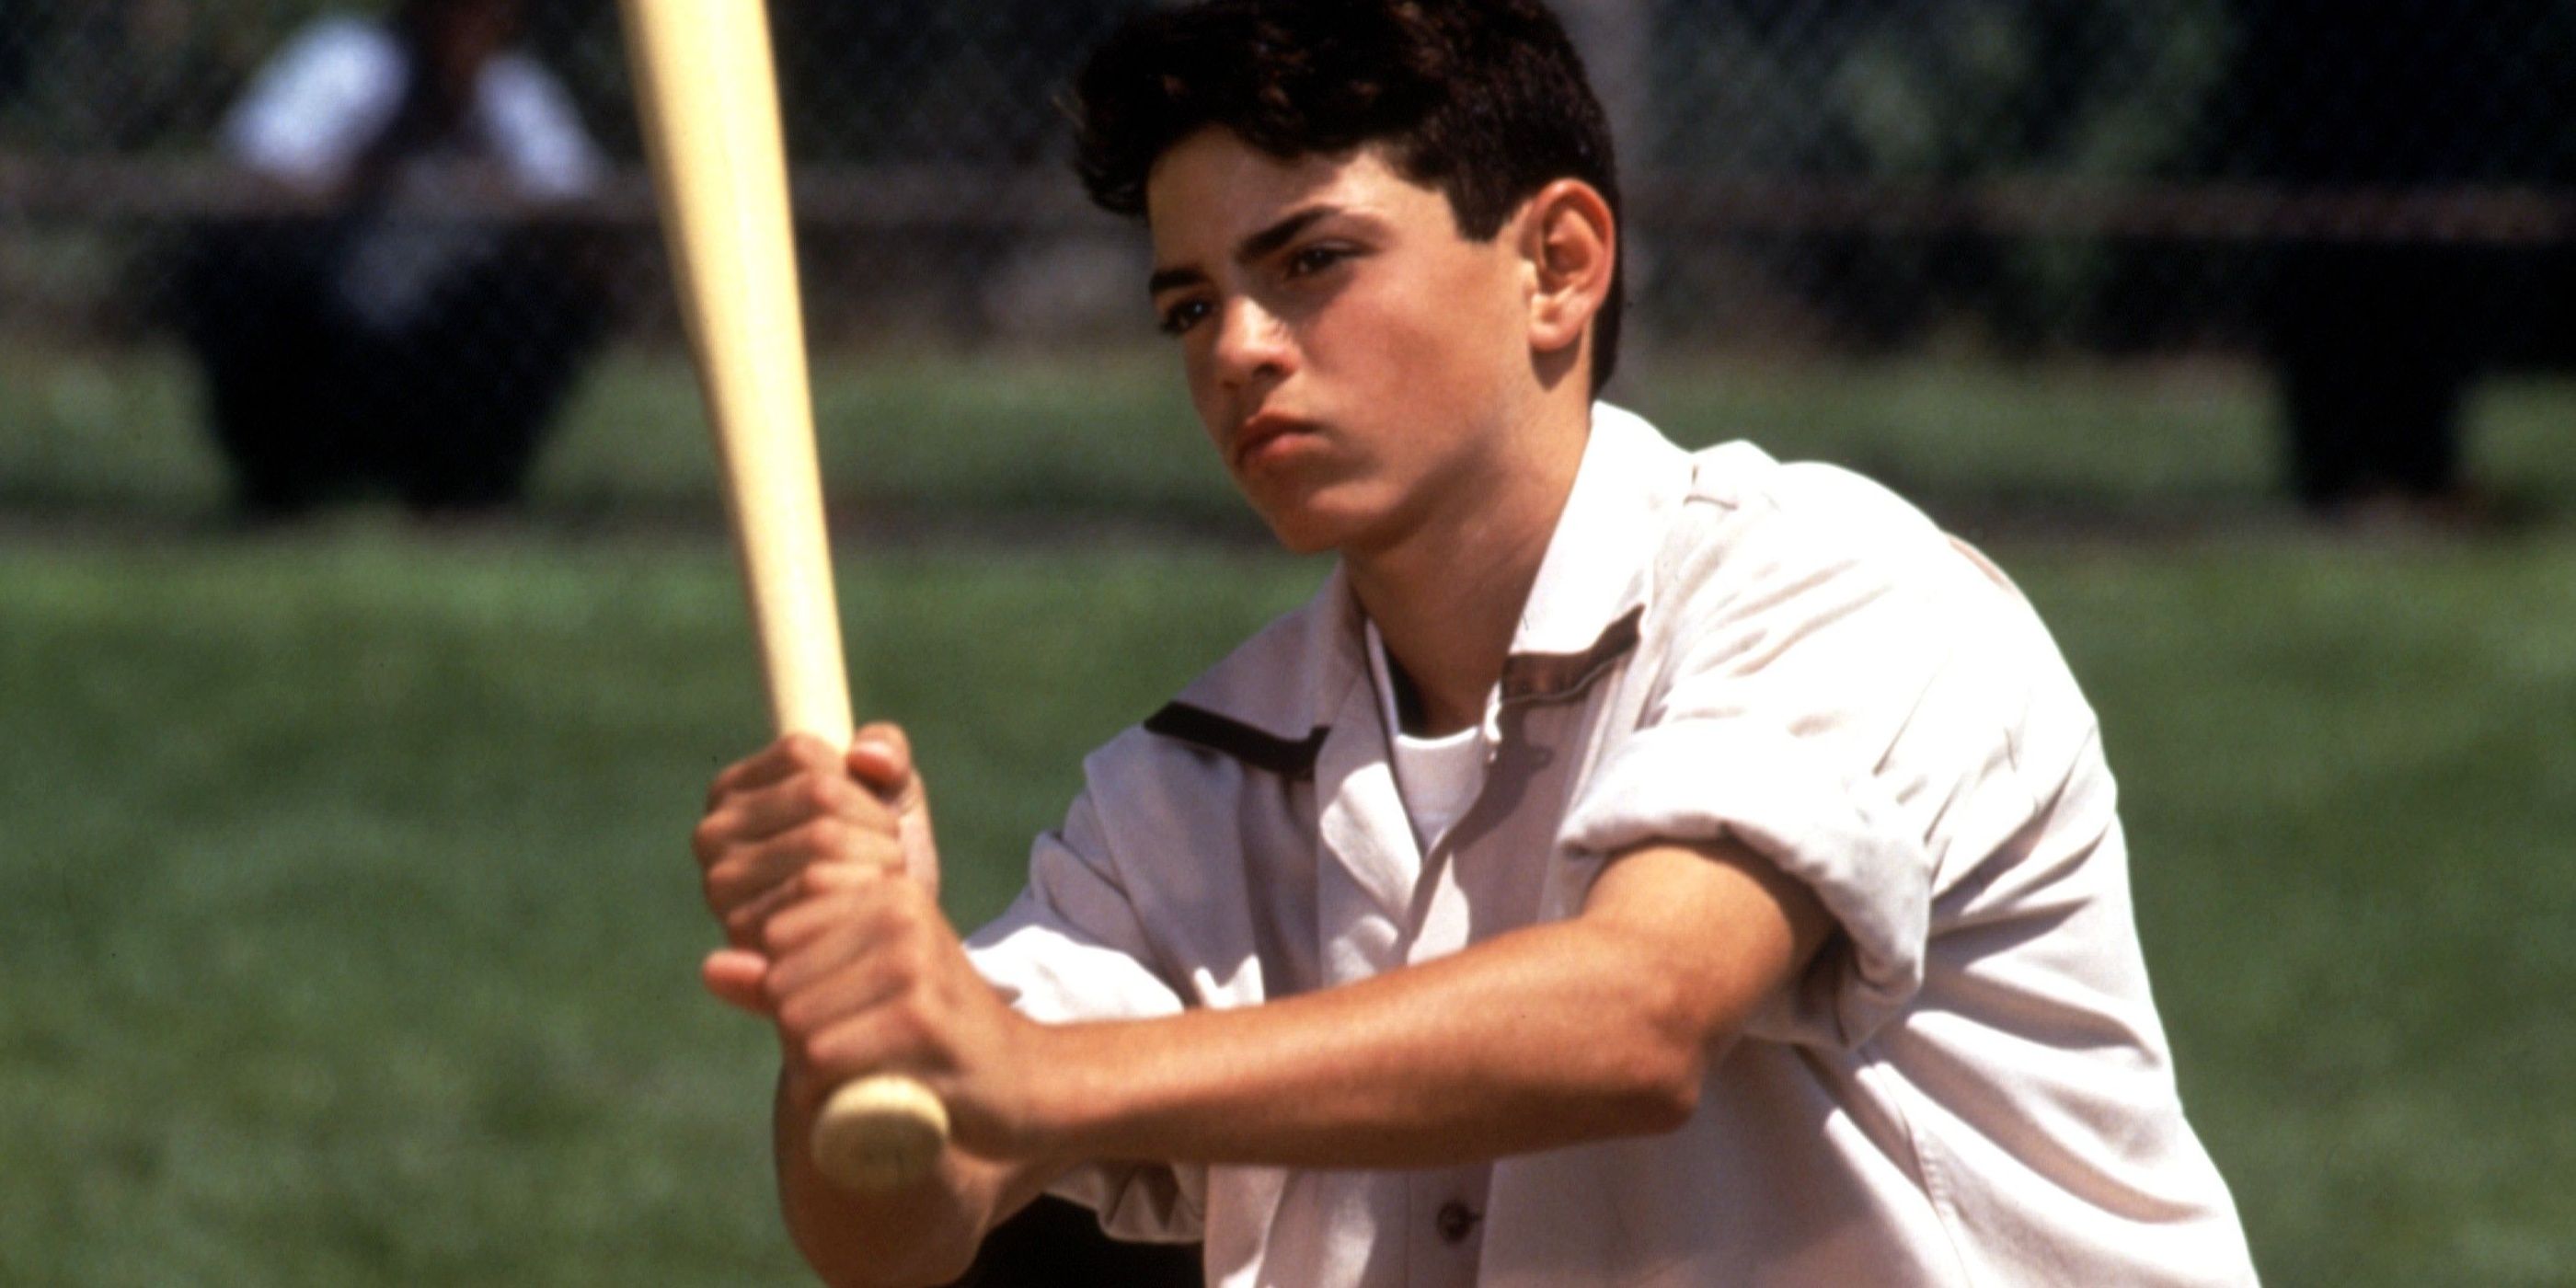 A kid holding a baseball bat in The Sandlot